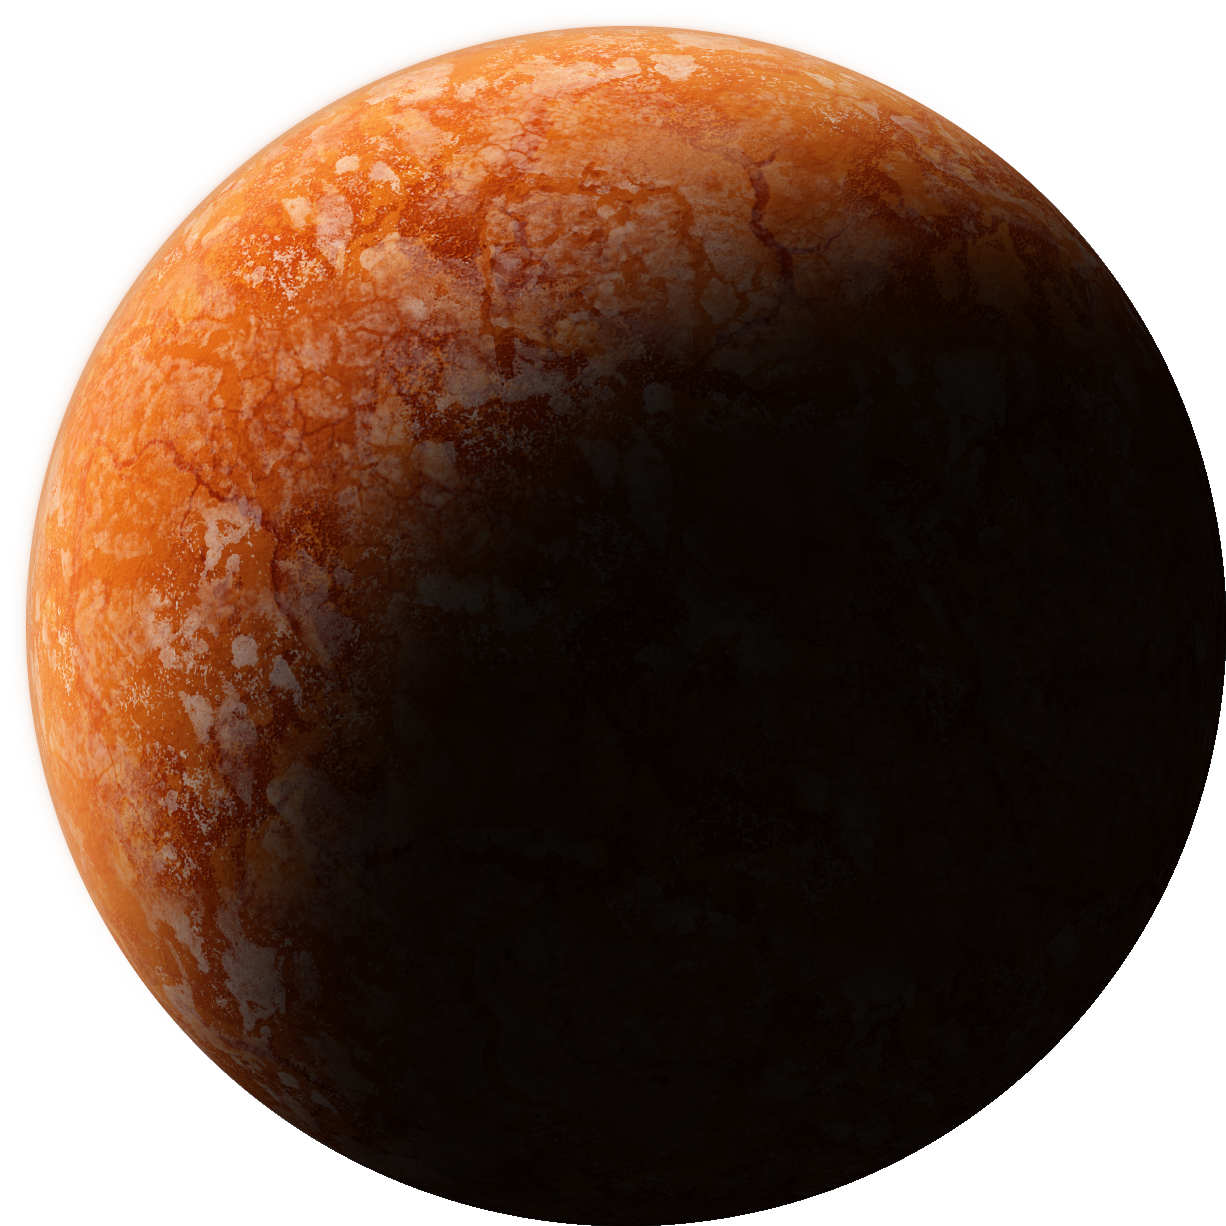 mars clipart orange planet